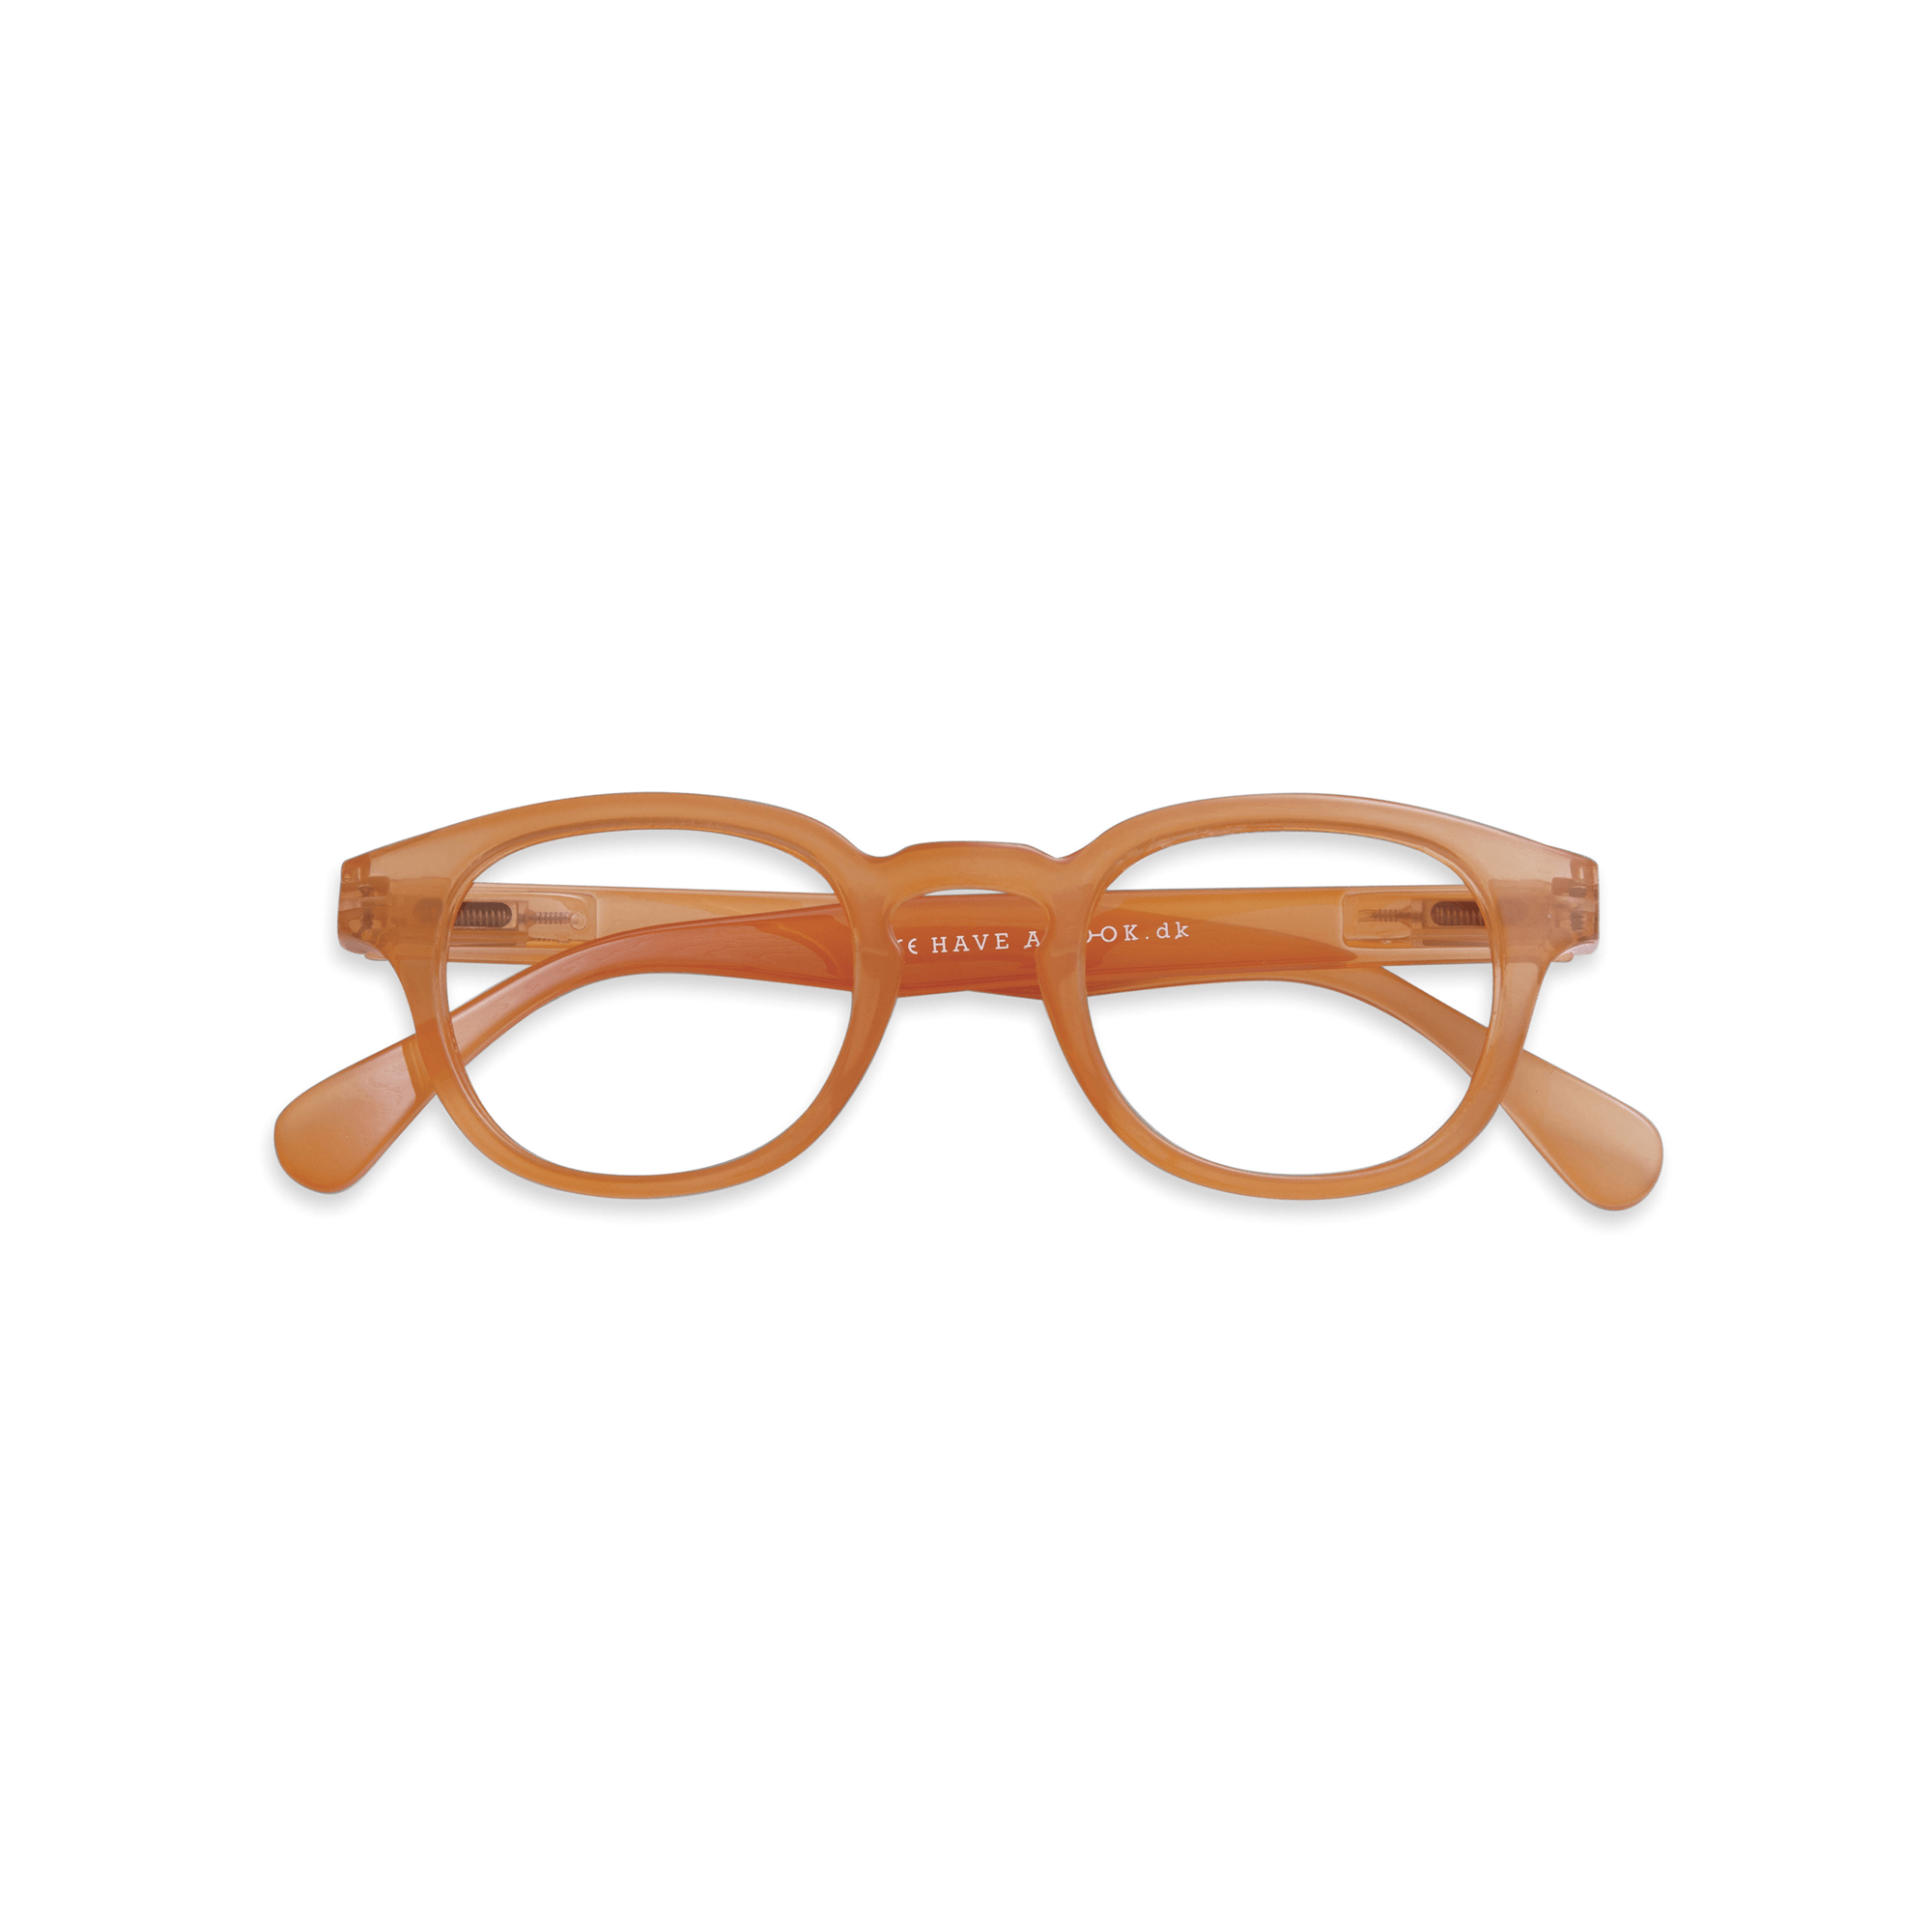 Minusglasögon Type C - orange